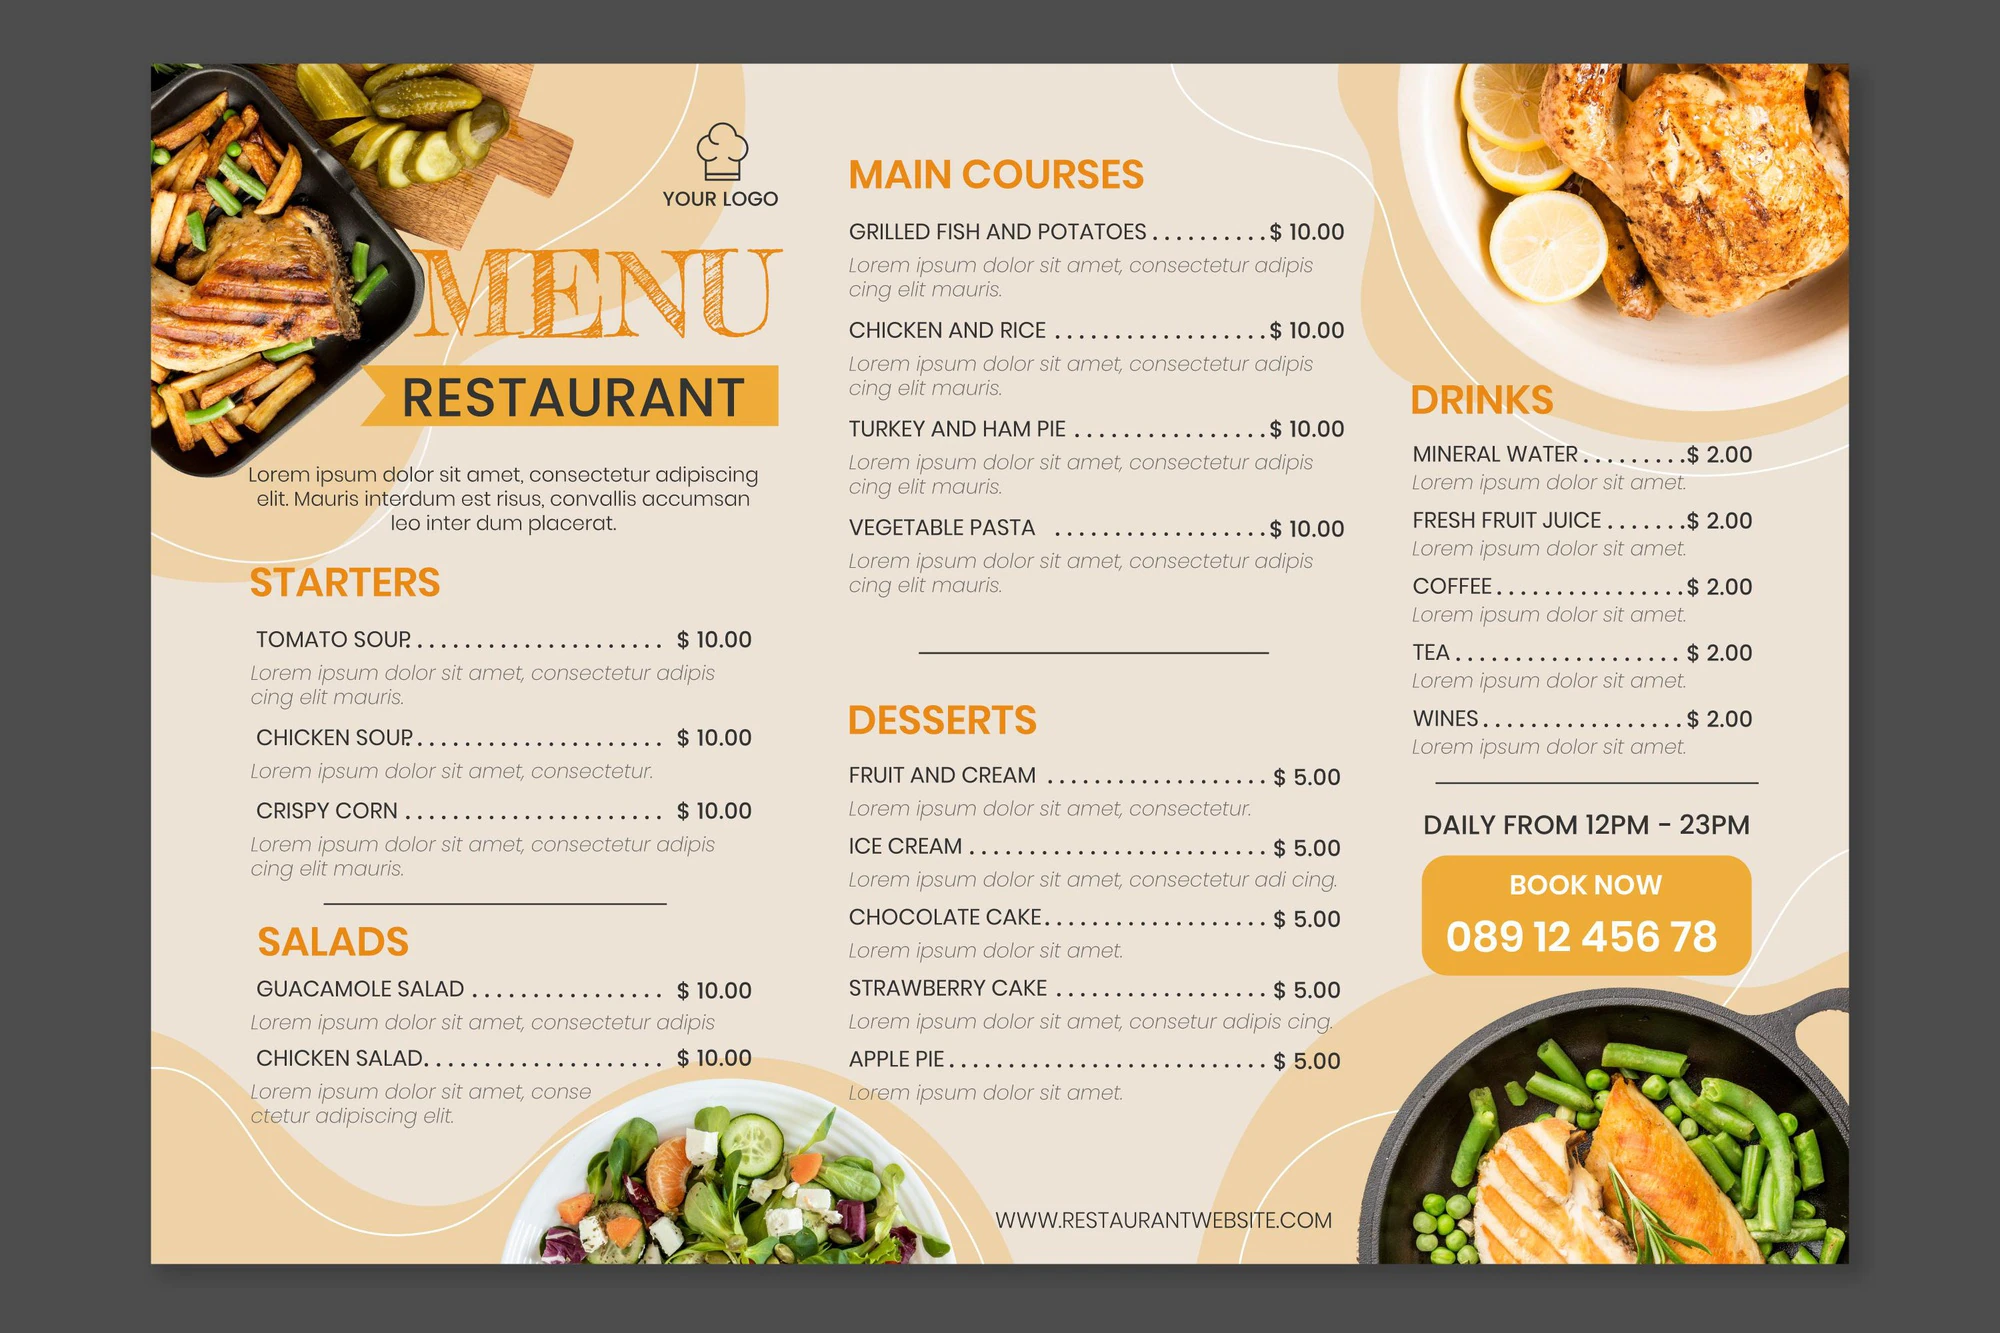 organic flat rustic restaurant menu template with photo 52683 62703